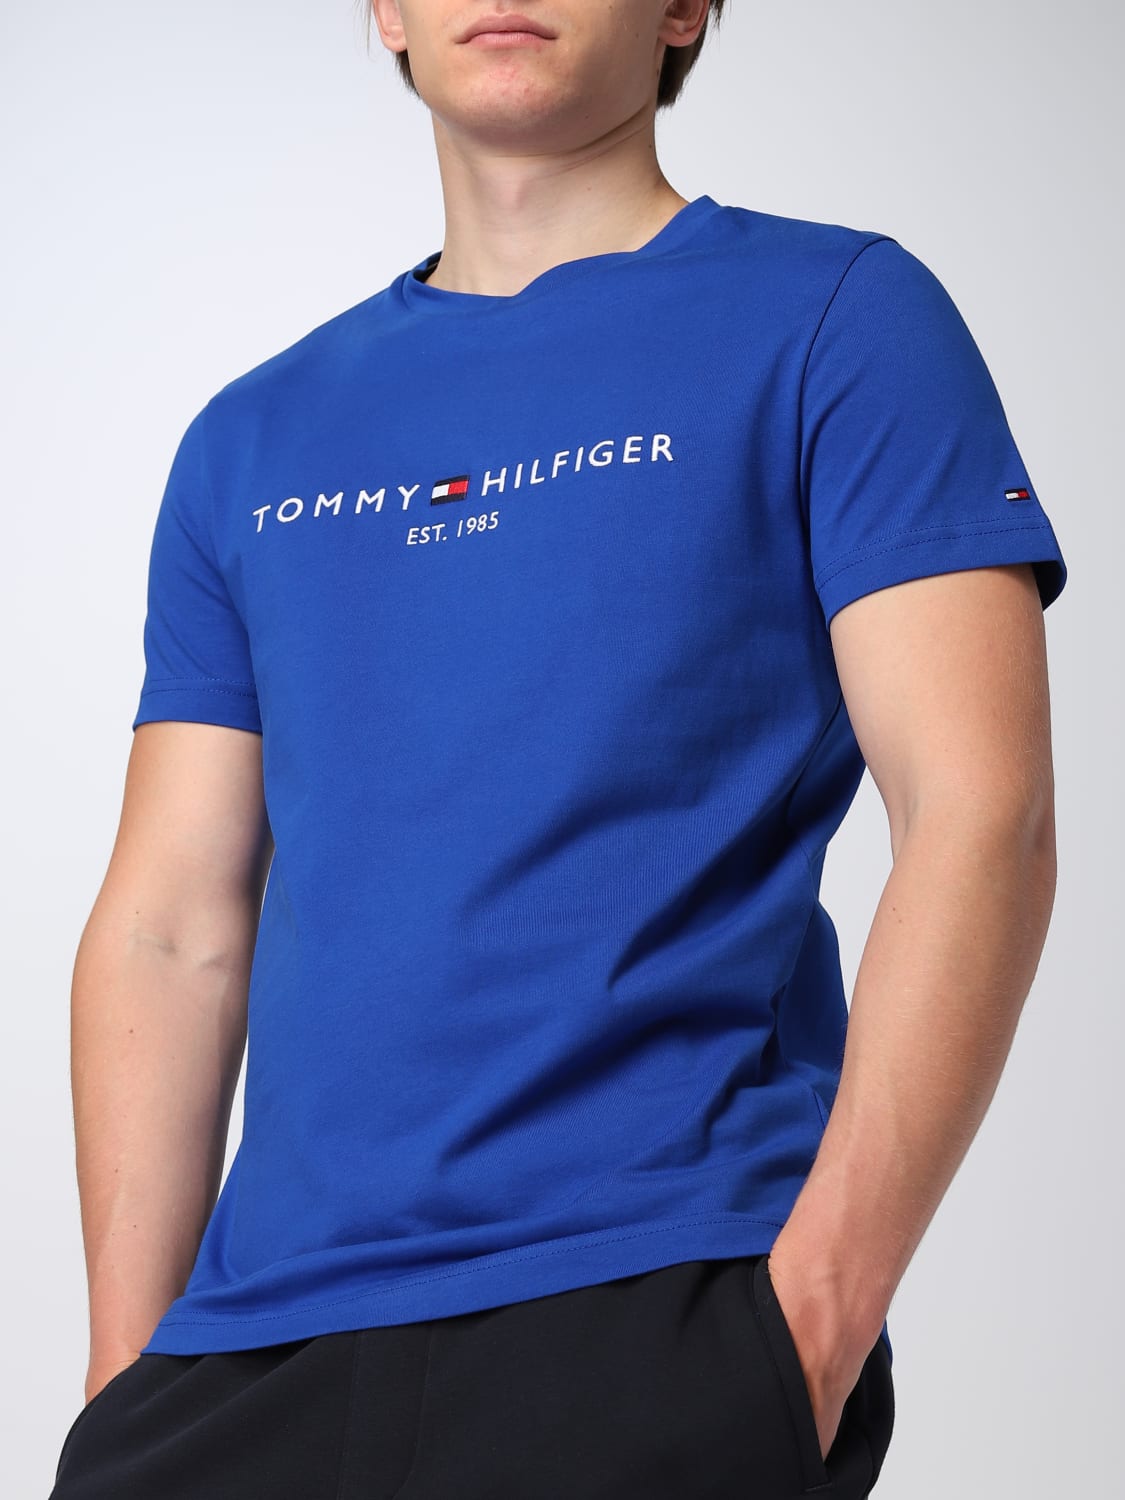 TOMMY HILFIGER, Men's T-shirt